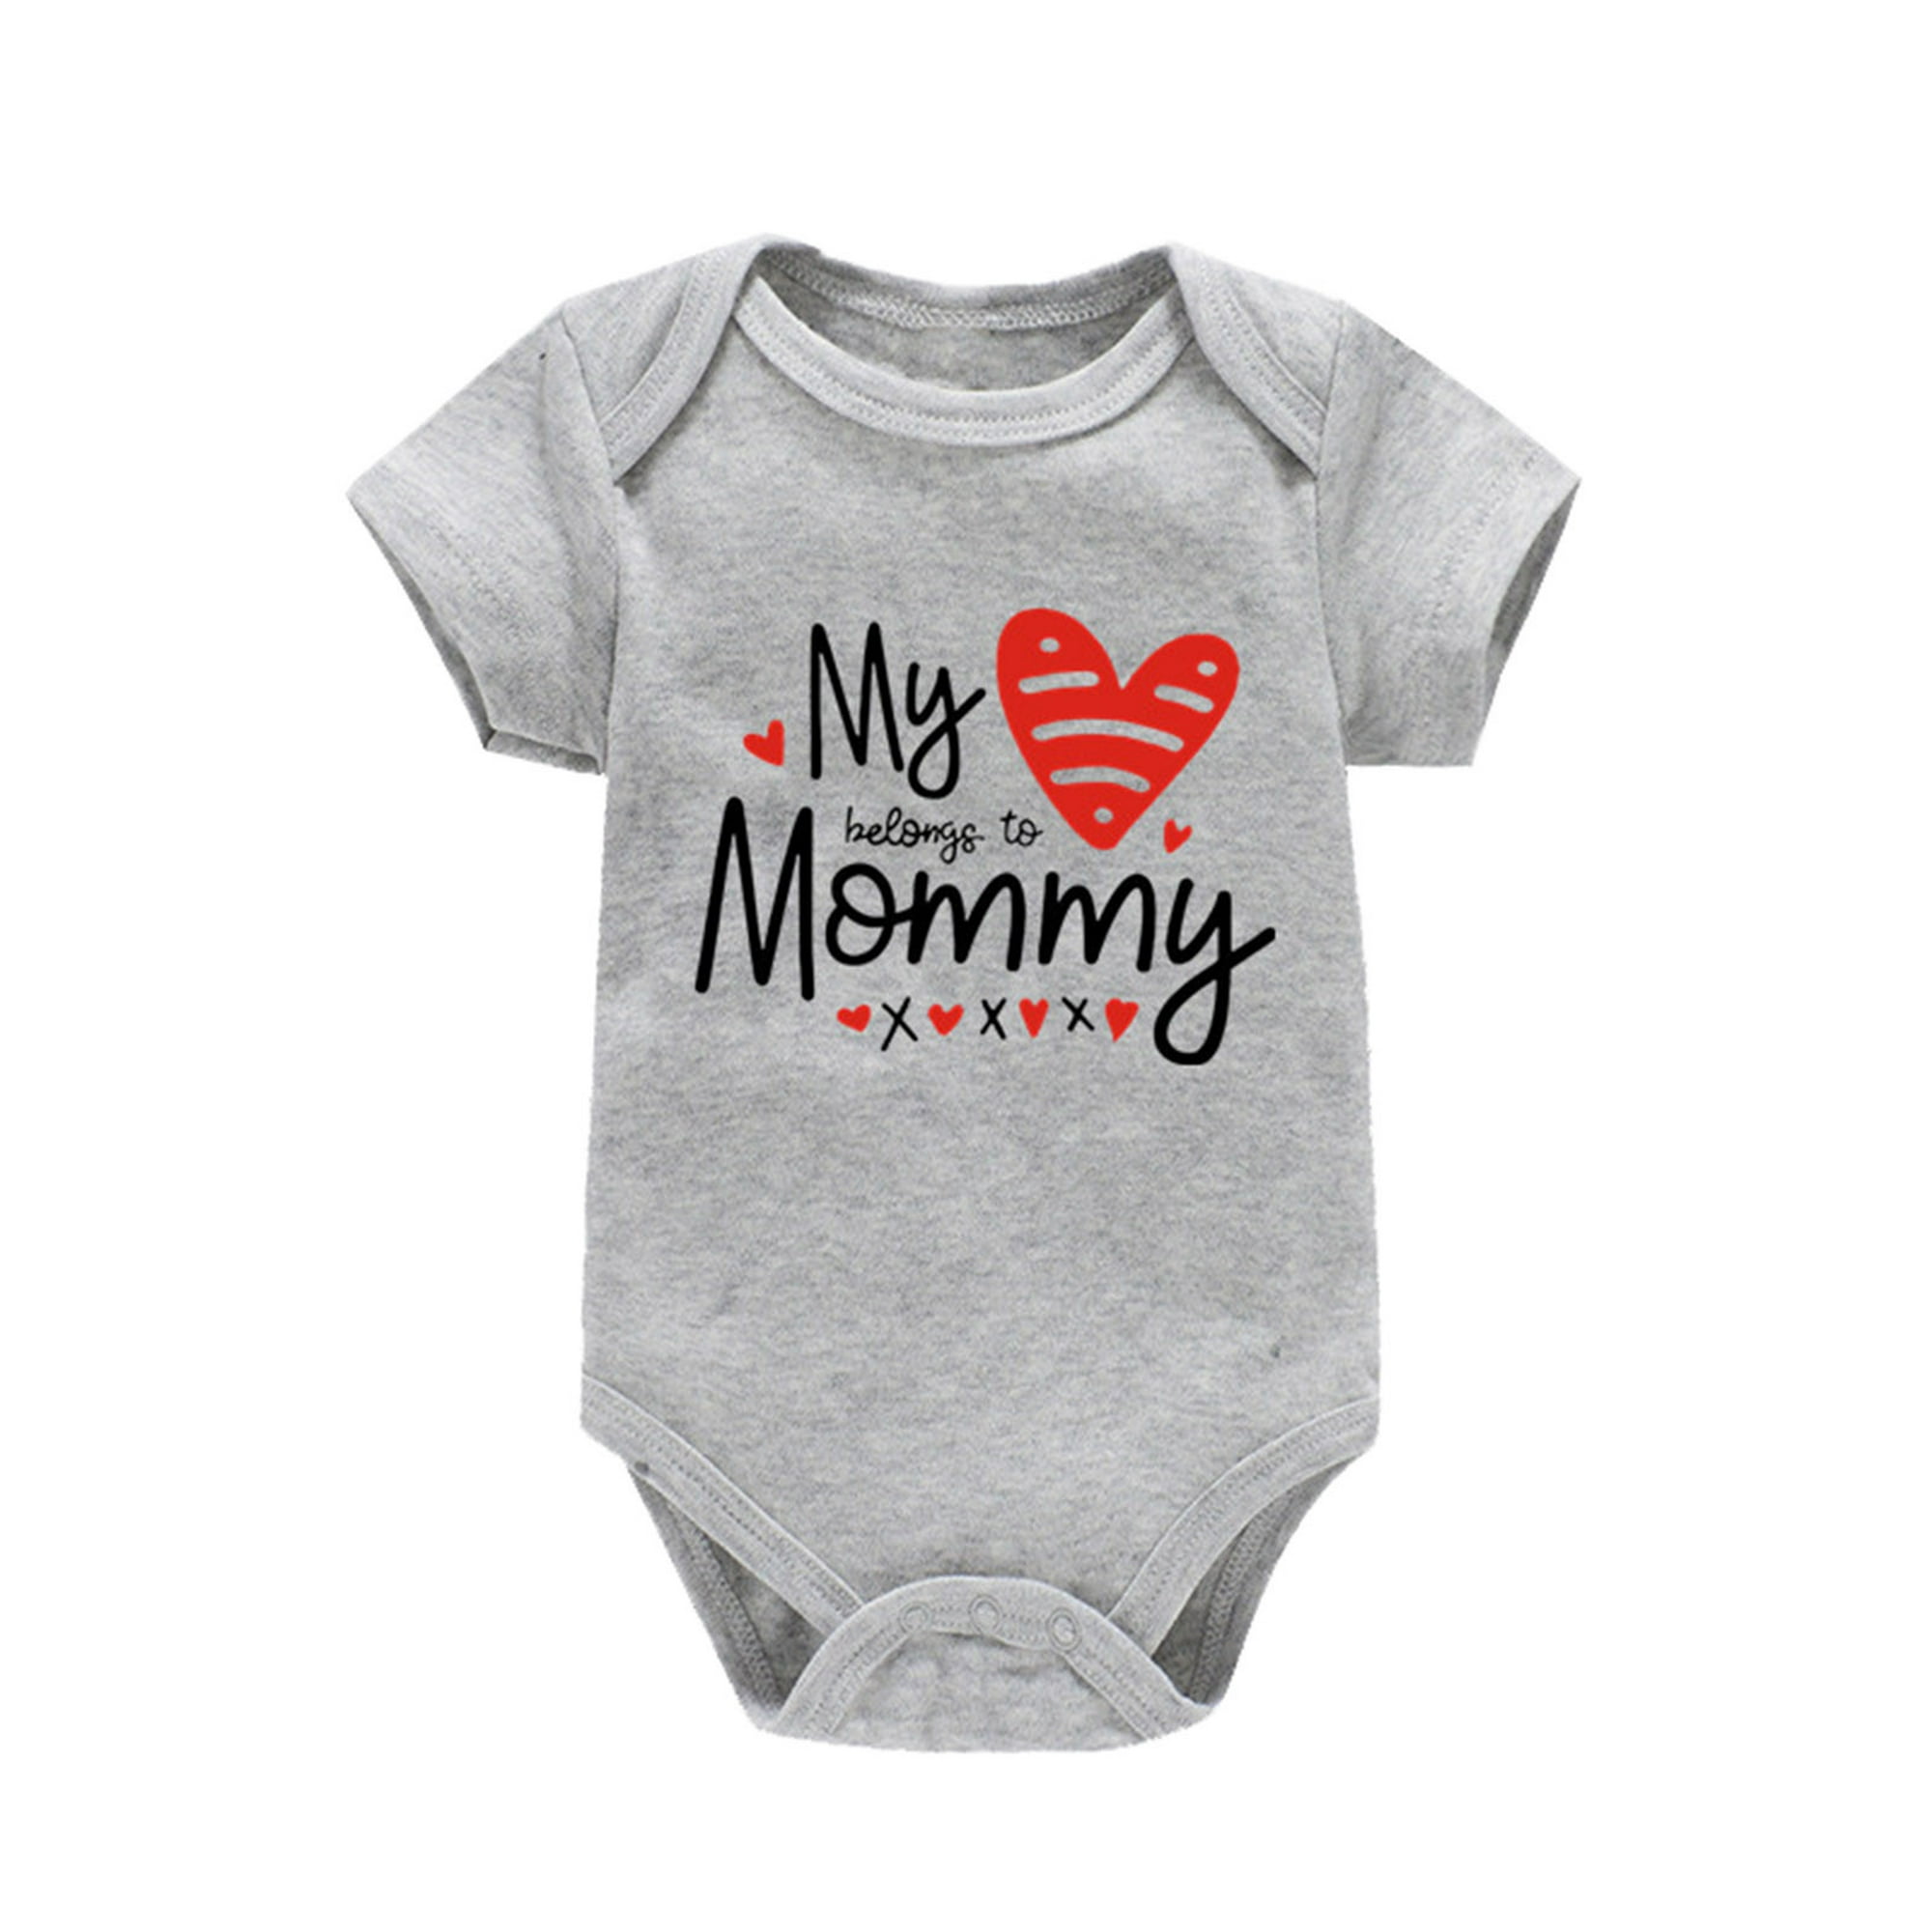 Ropa de bebé para niñas, ropa de niño pequeño, ropa de bebé niño,  pantalones cortos sólidos de manga corta (gris, 3-6 meses)